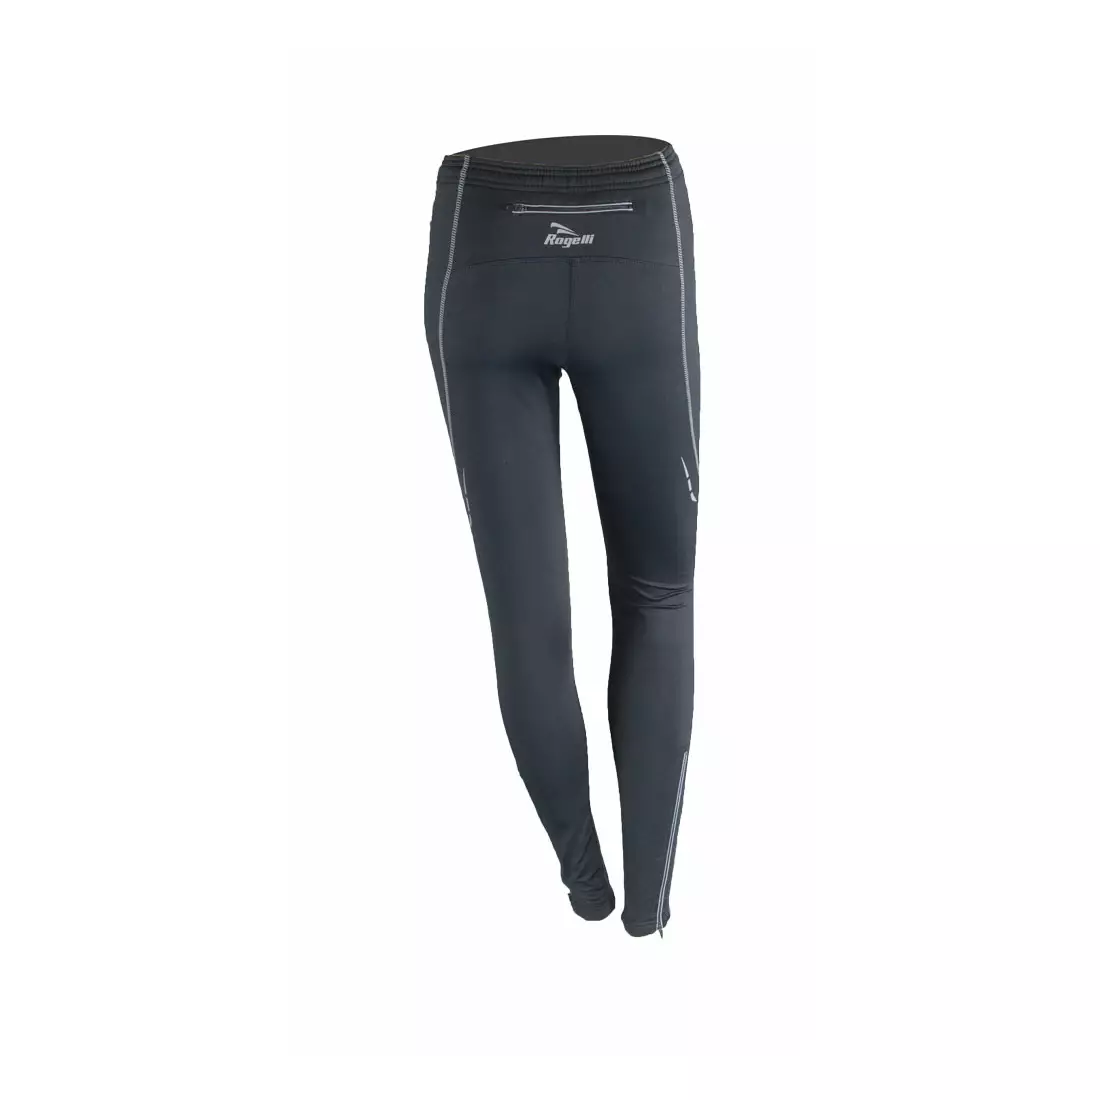 ROGELLI RUN GAIL - women's trousers, insulated